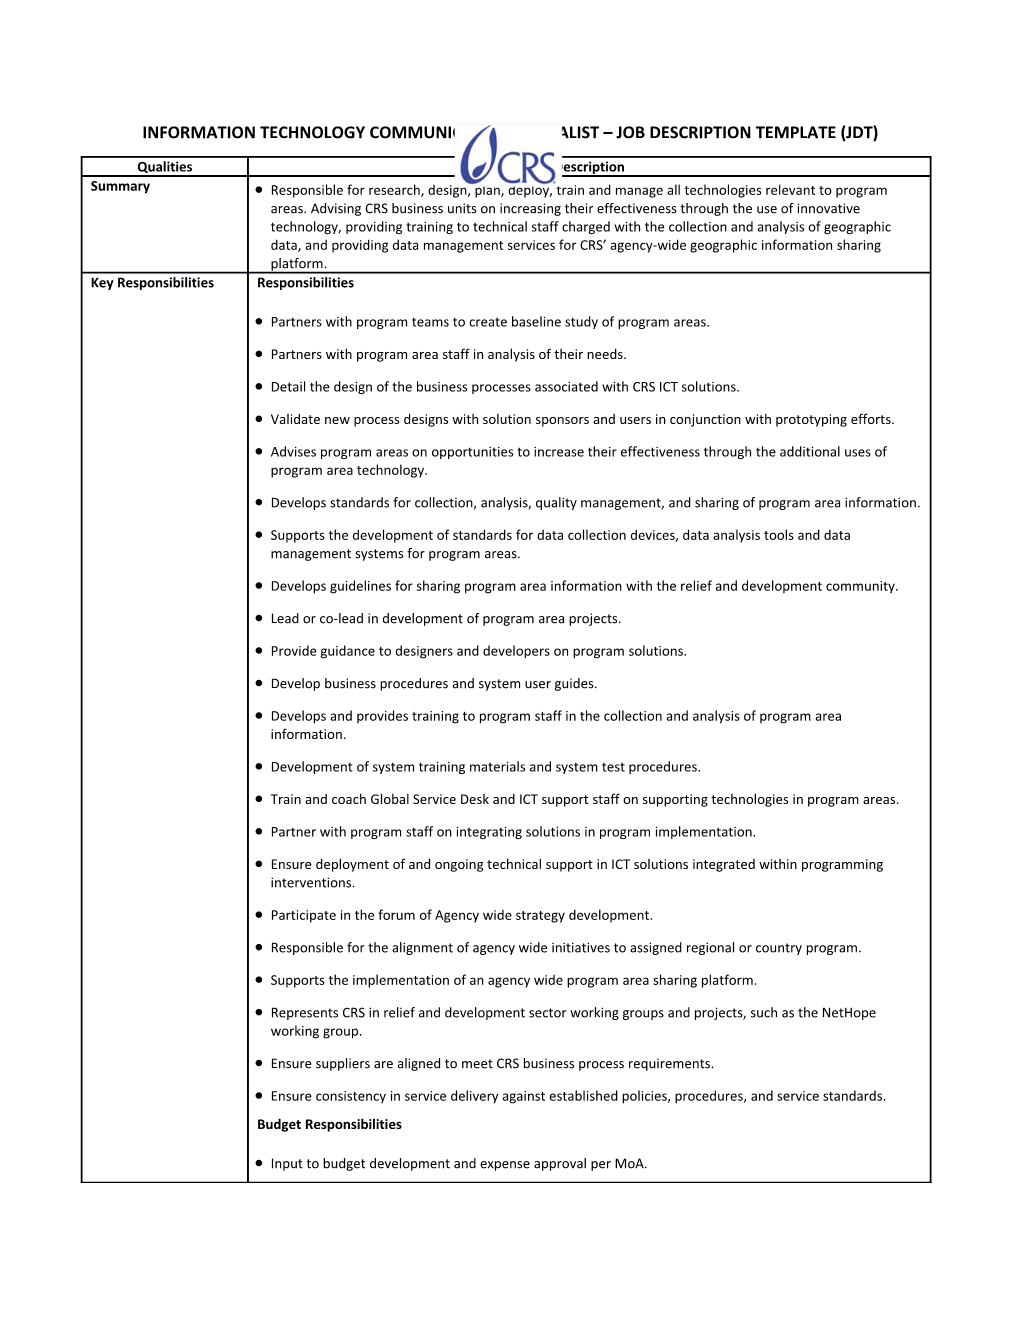 Information Technology Communication Specialist Job Description Template (Jdt)